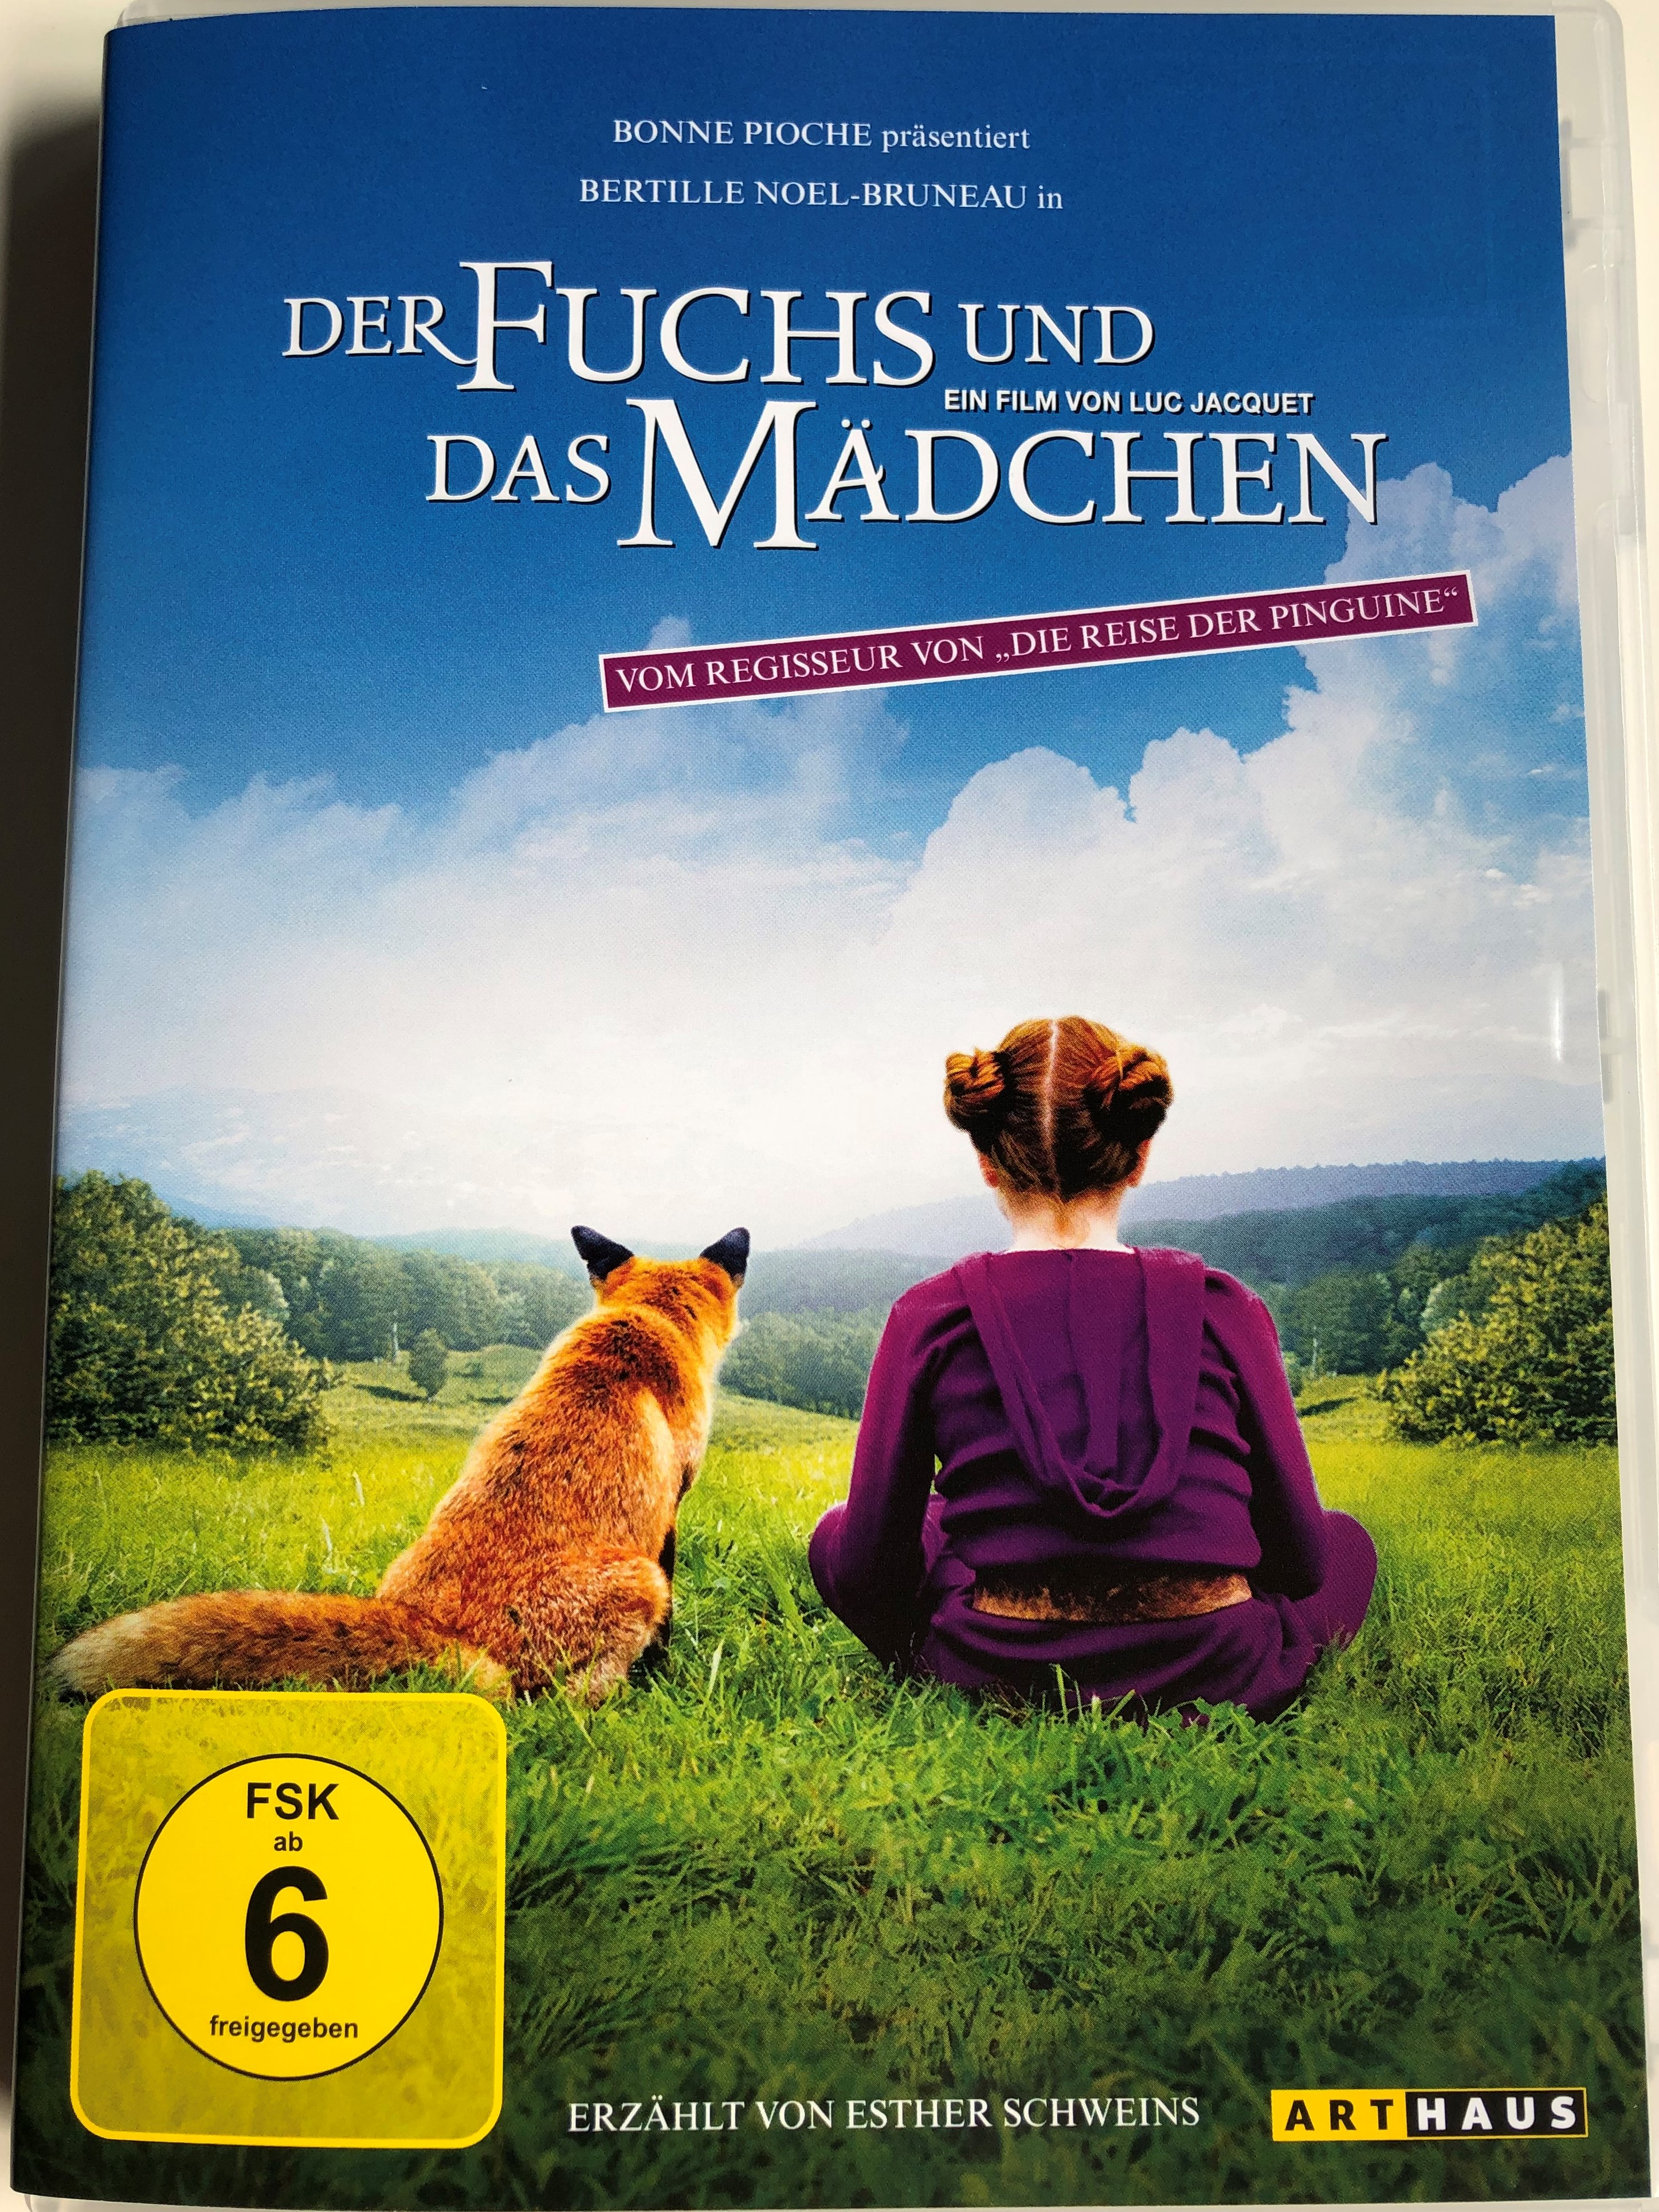 Der Fuchs und Das Mädchen DVD 2007 The Fox and the child / Directed by Luc  Jacquet / Starring: Bertille Noël-Bruneau, Isabelle Carré -  bibleinmylanguage